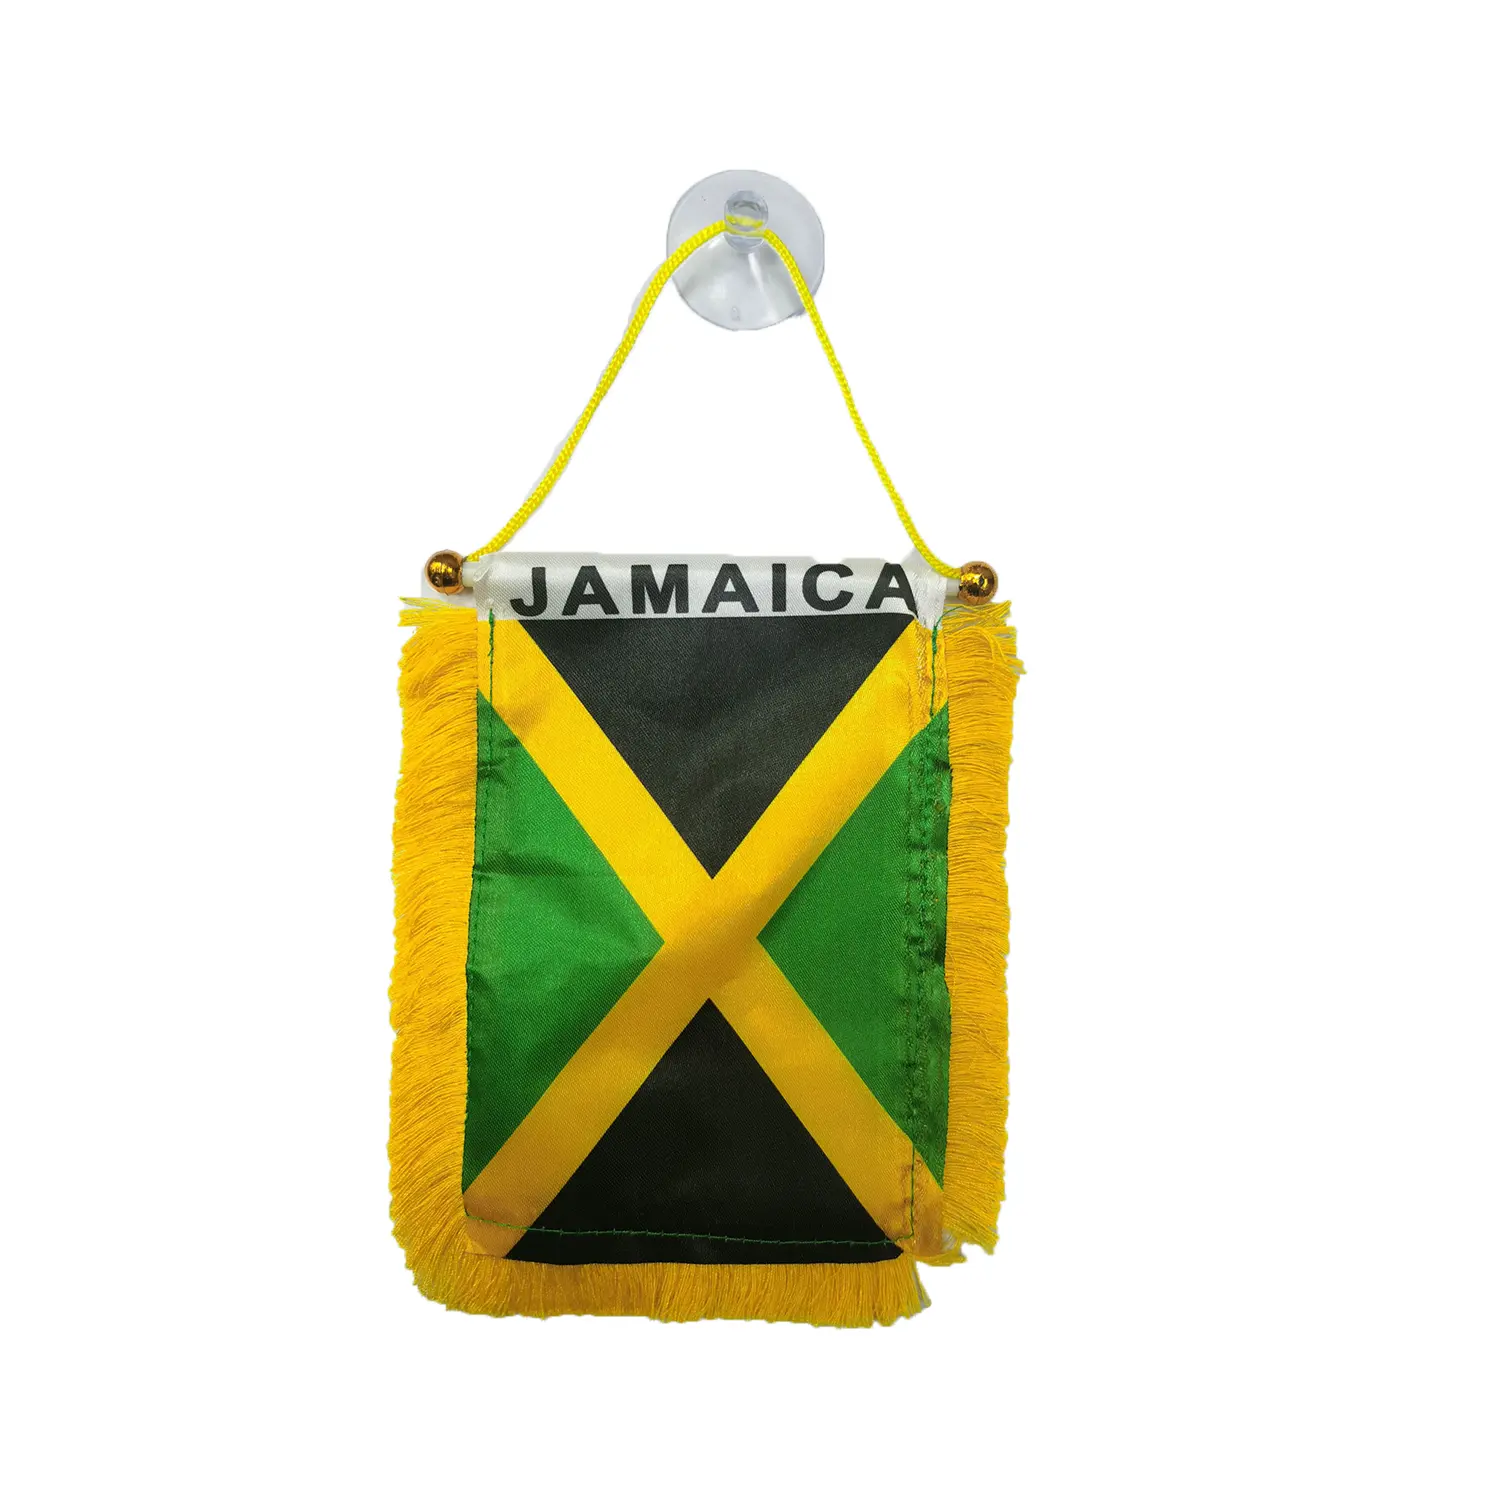 Cheap Rearview Mirror Automobile car SUV truck Jamaica Jamaican flag pennant